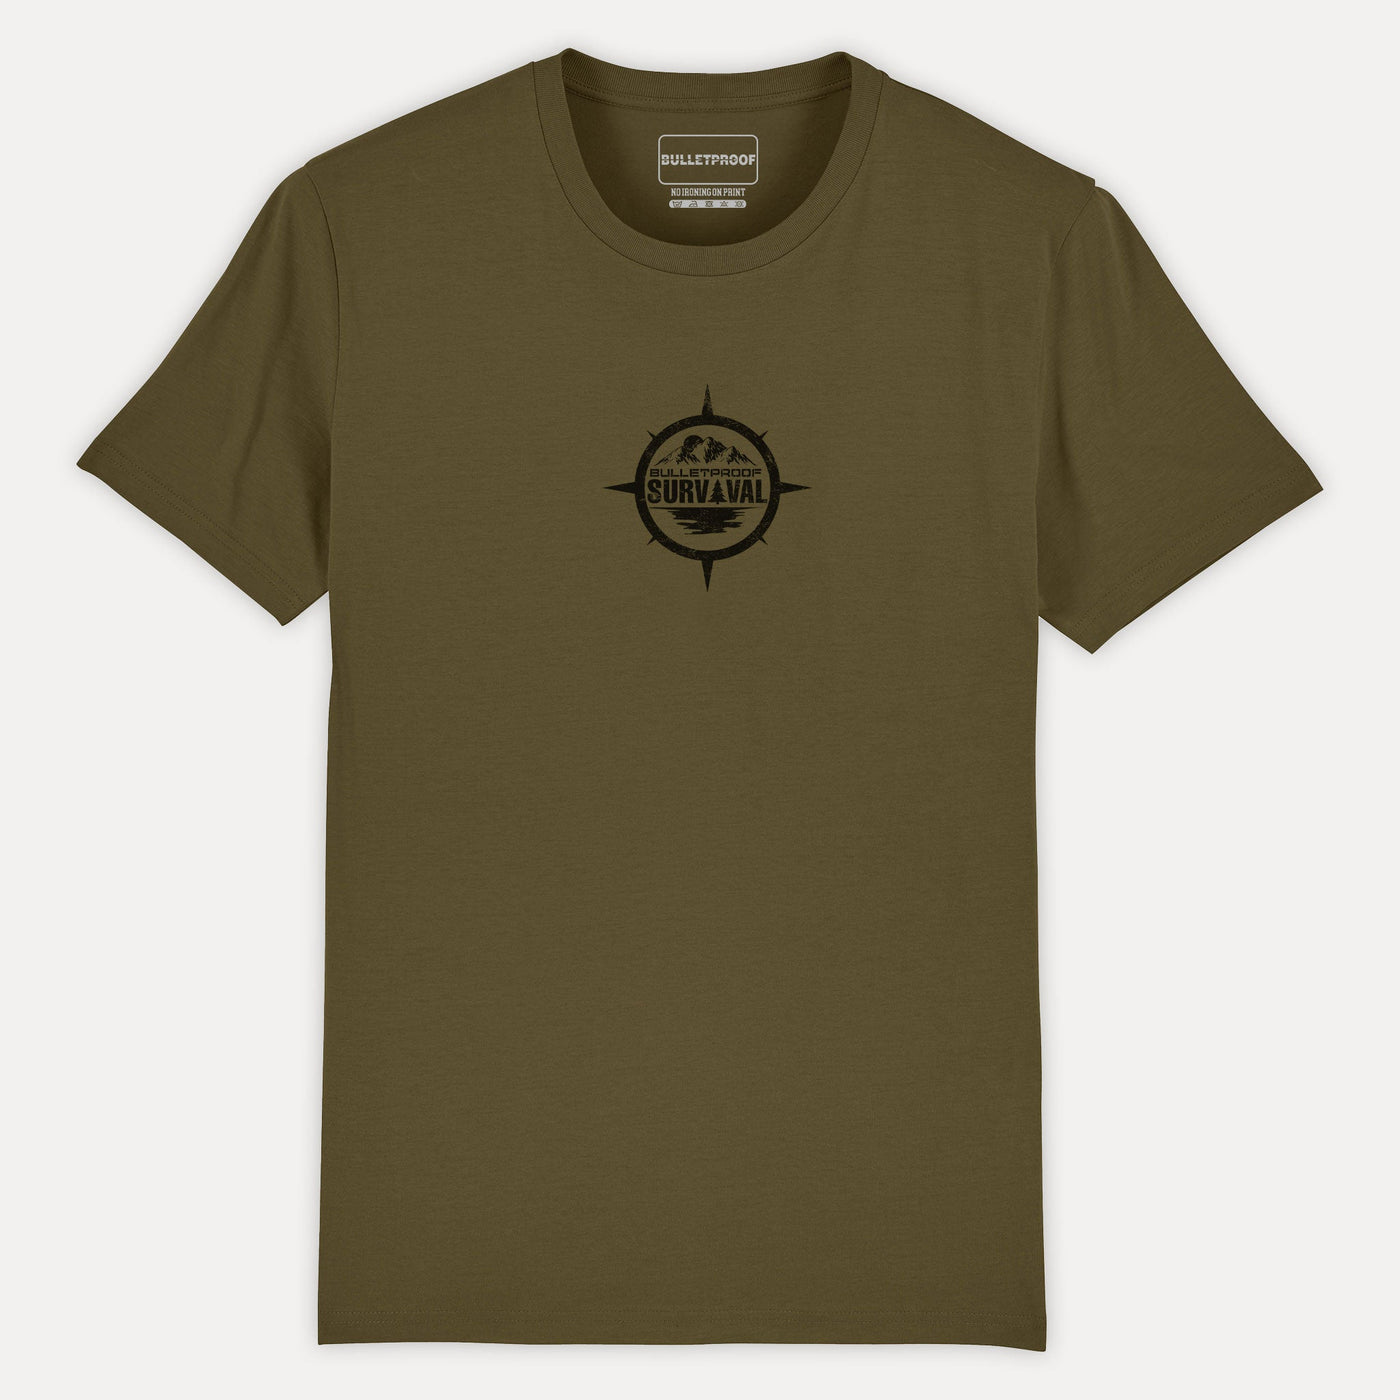 SALE Bulletproof Survival T-Shirt